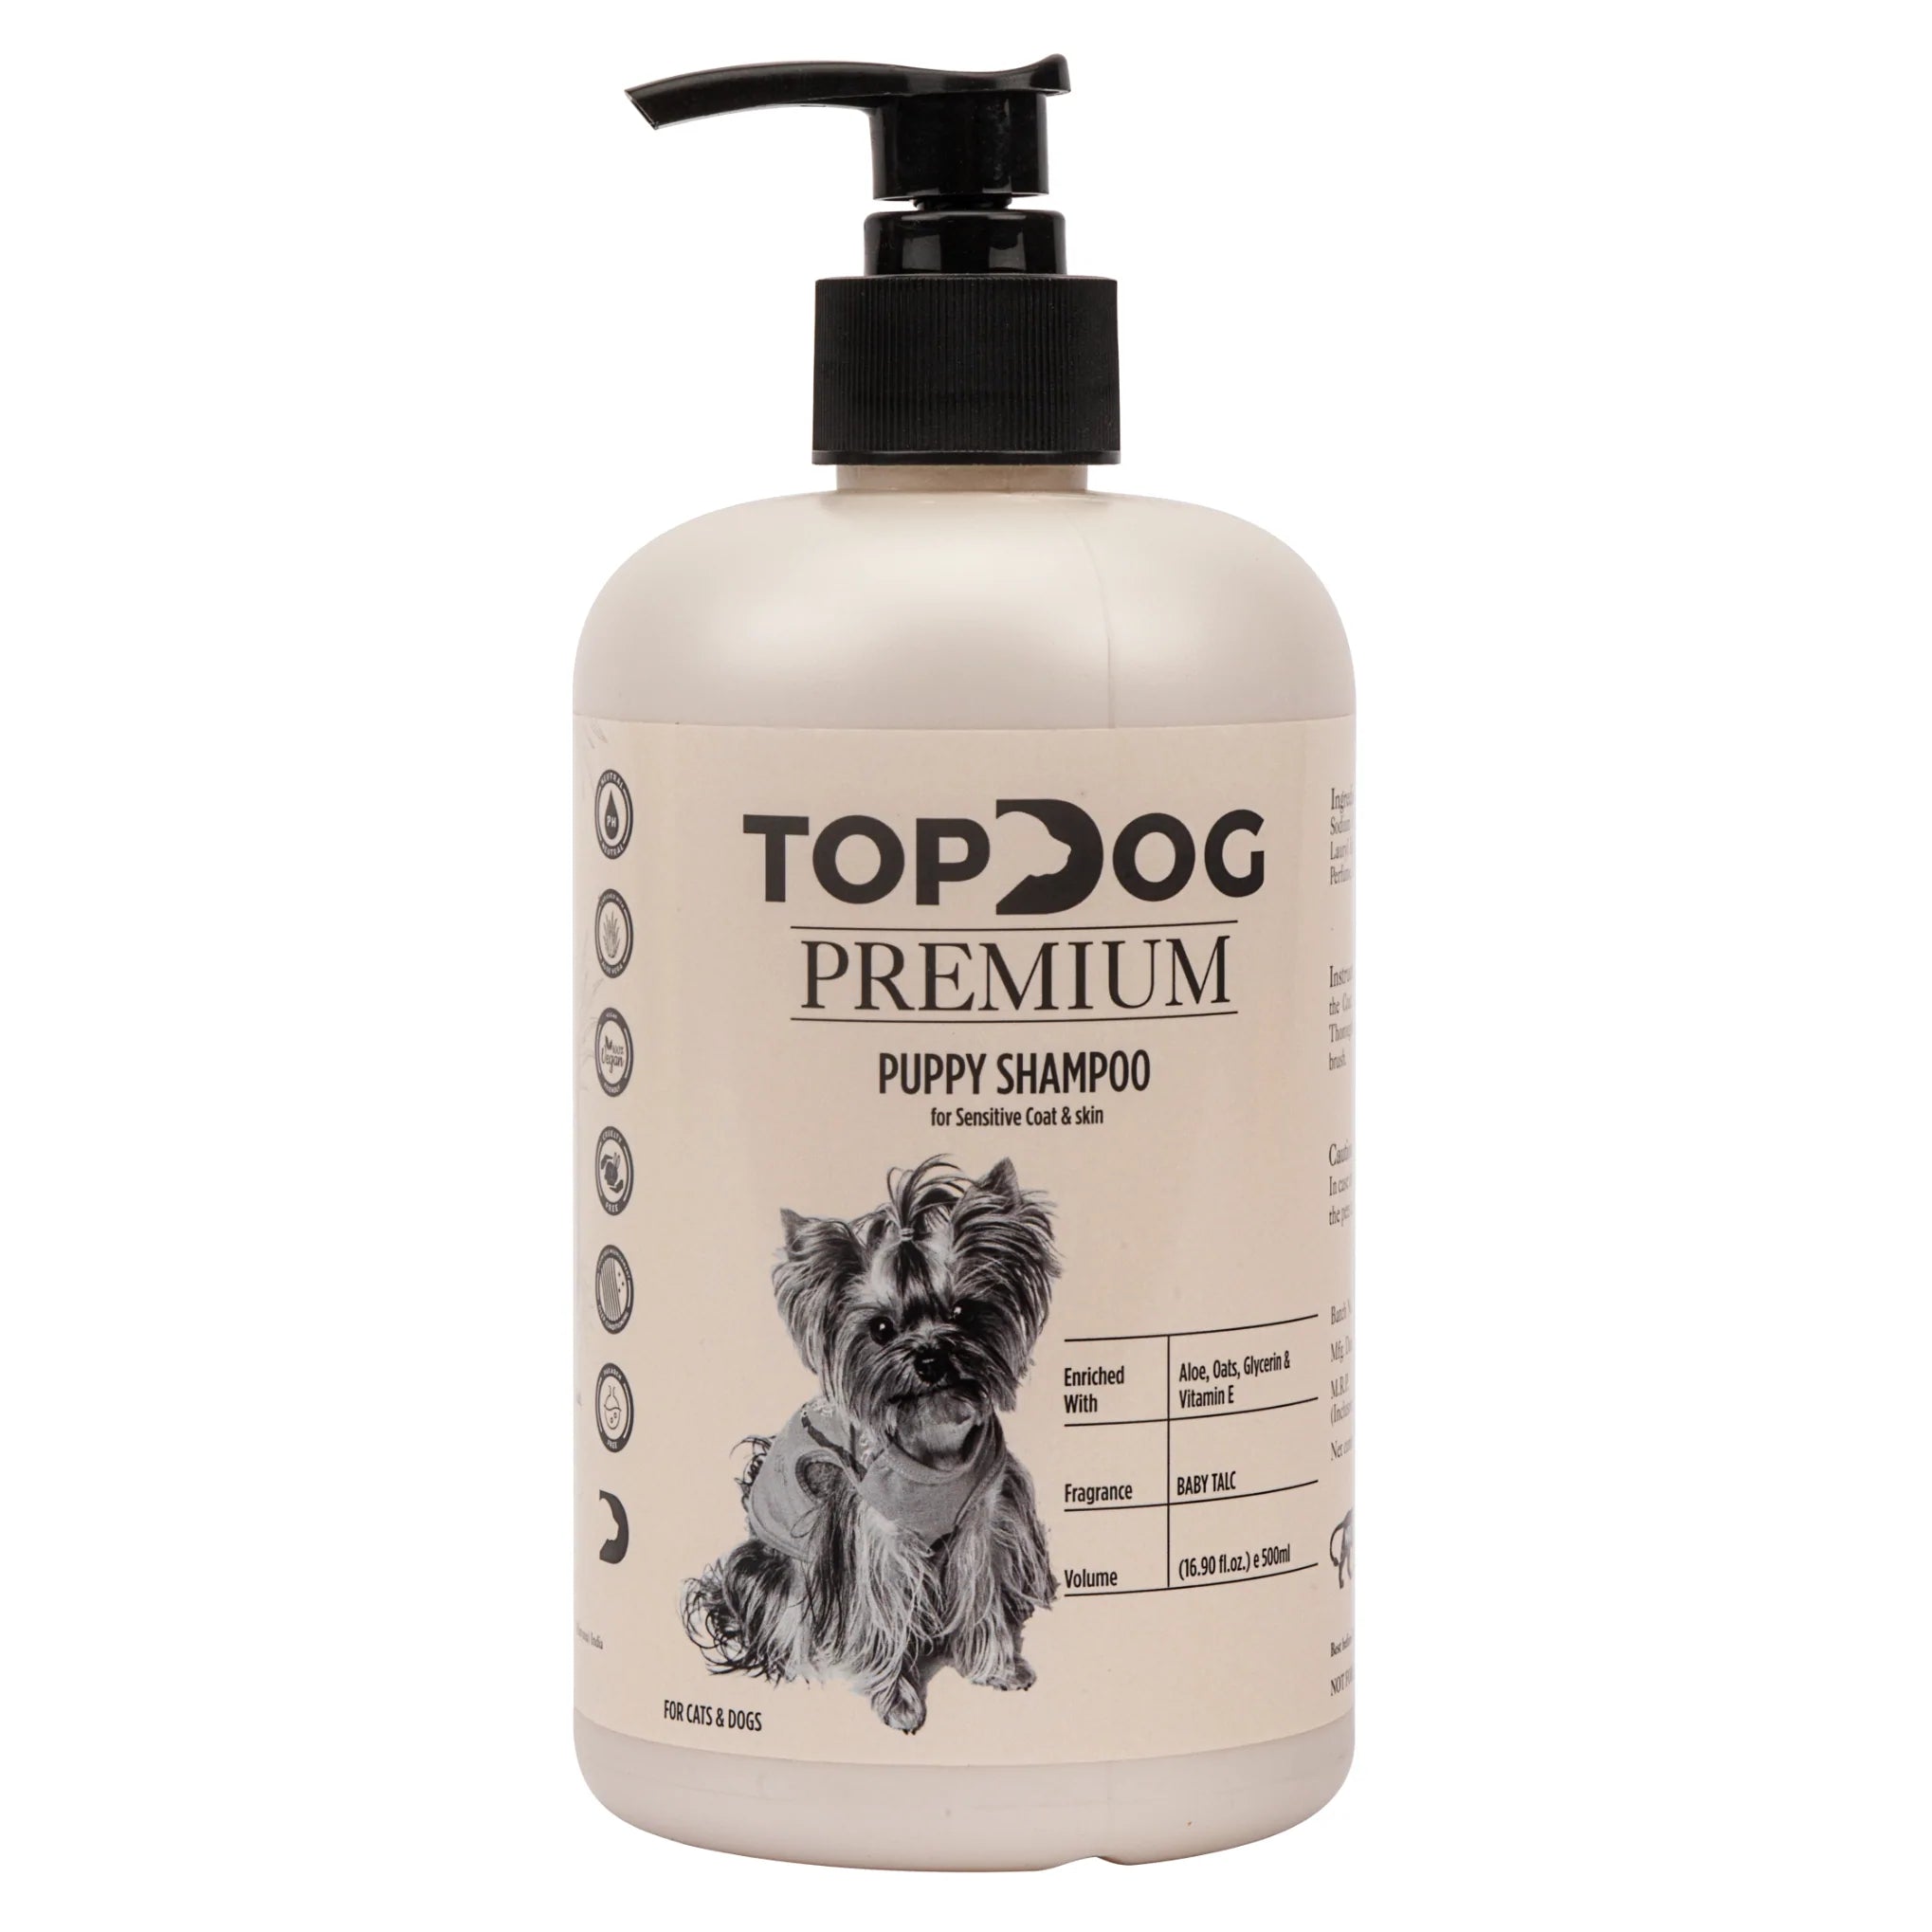 TopDog Premium puppy Shampoo